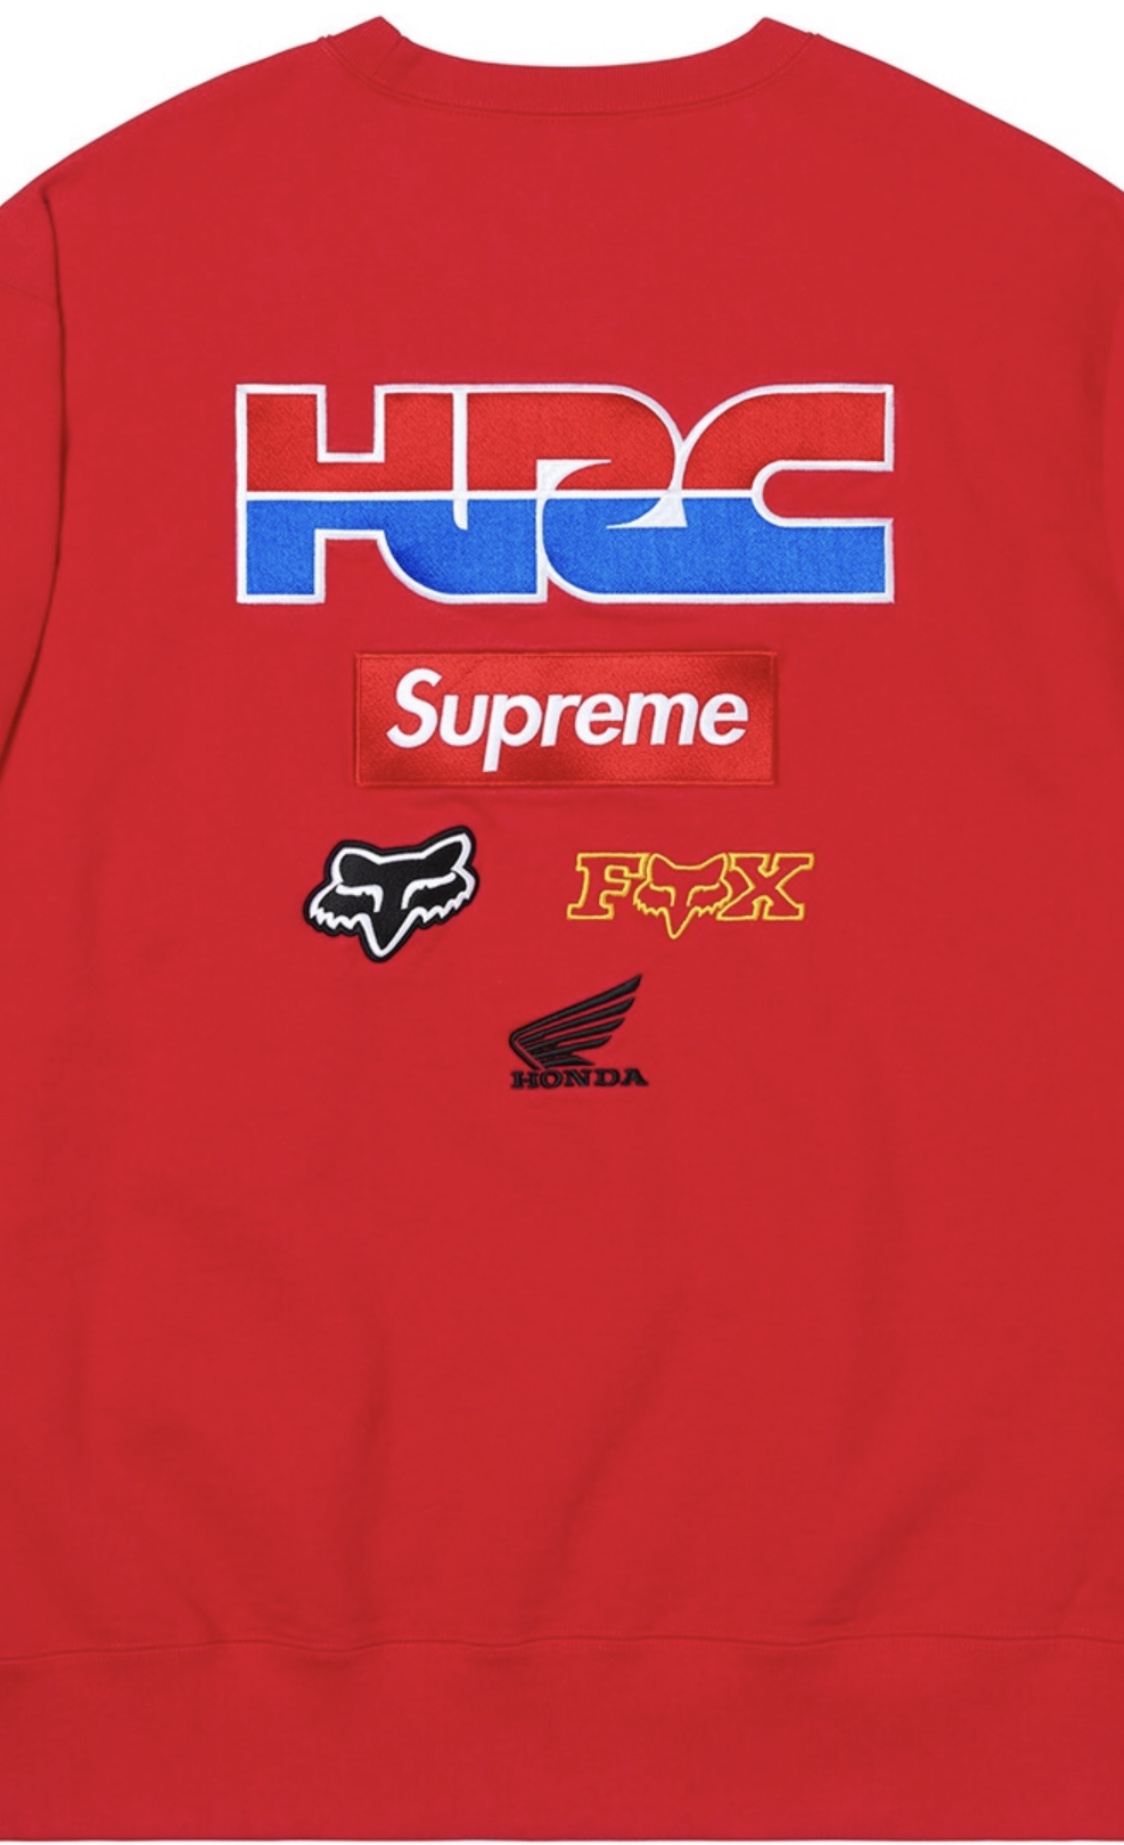 Supreme®/Honda®/Fox® Racing Crewneck - Red